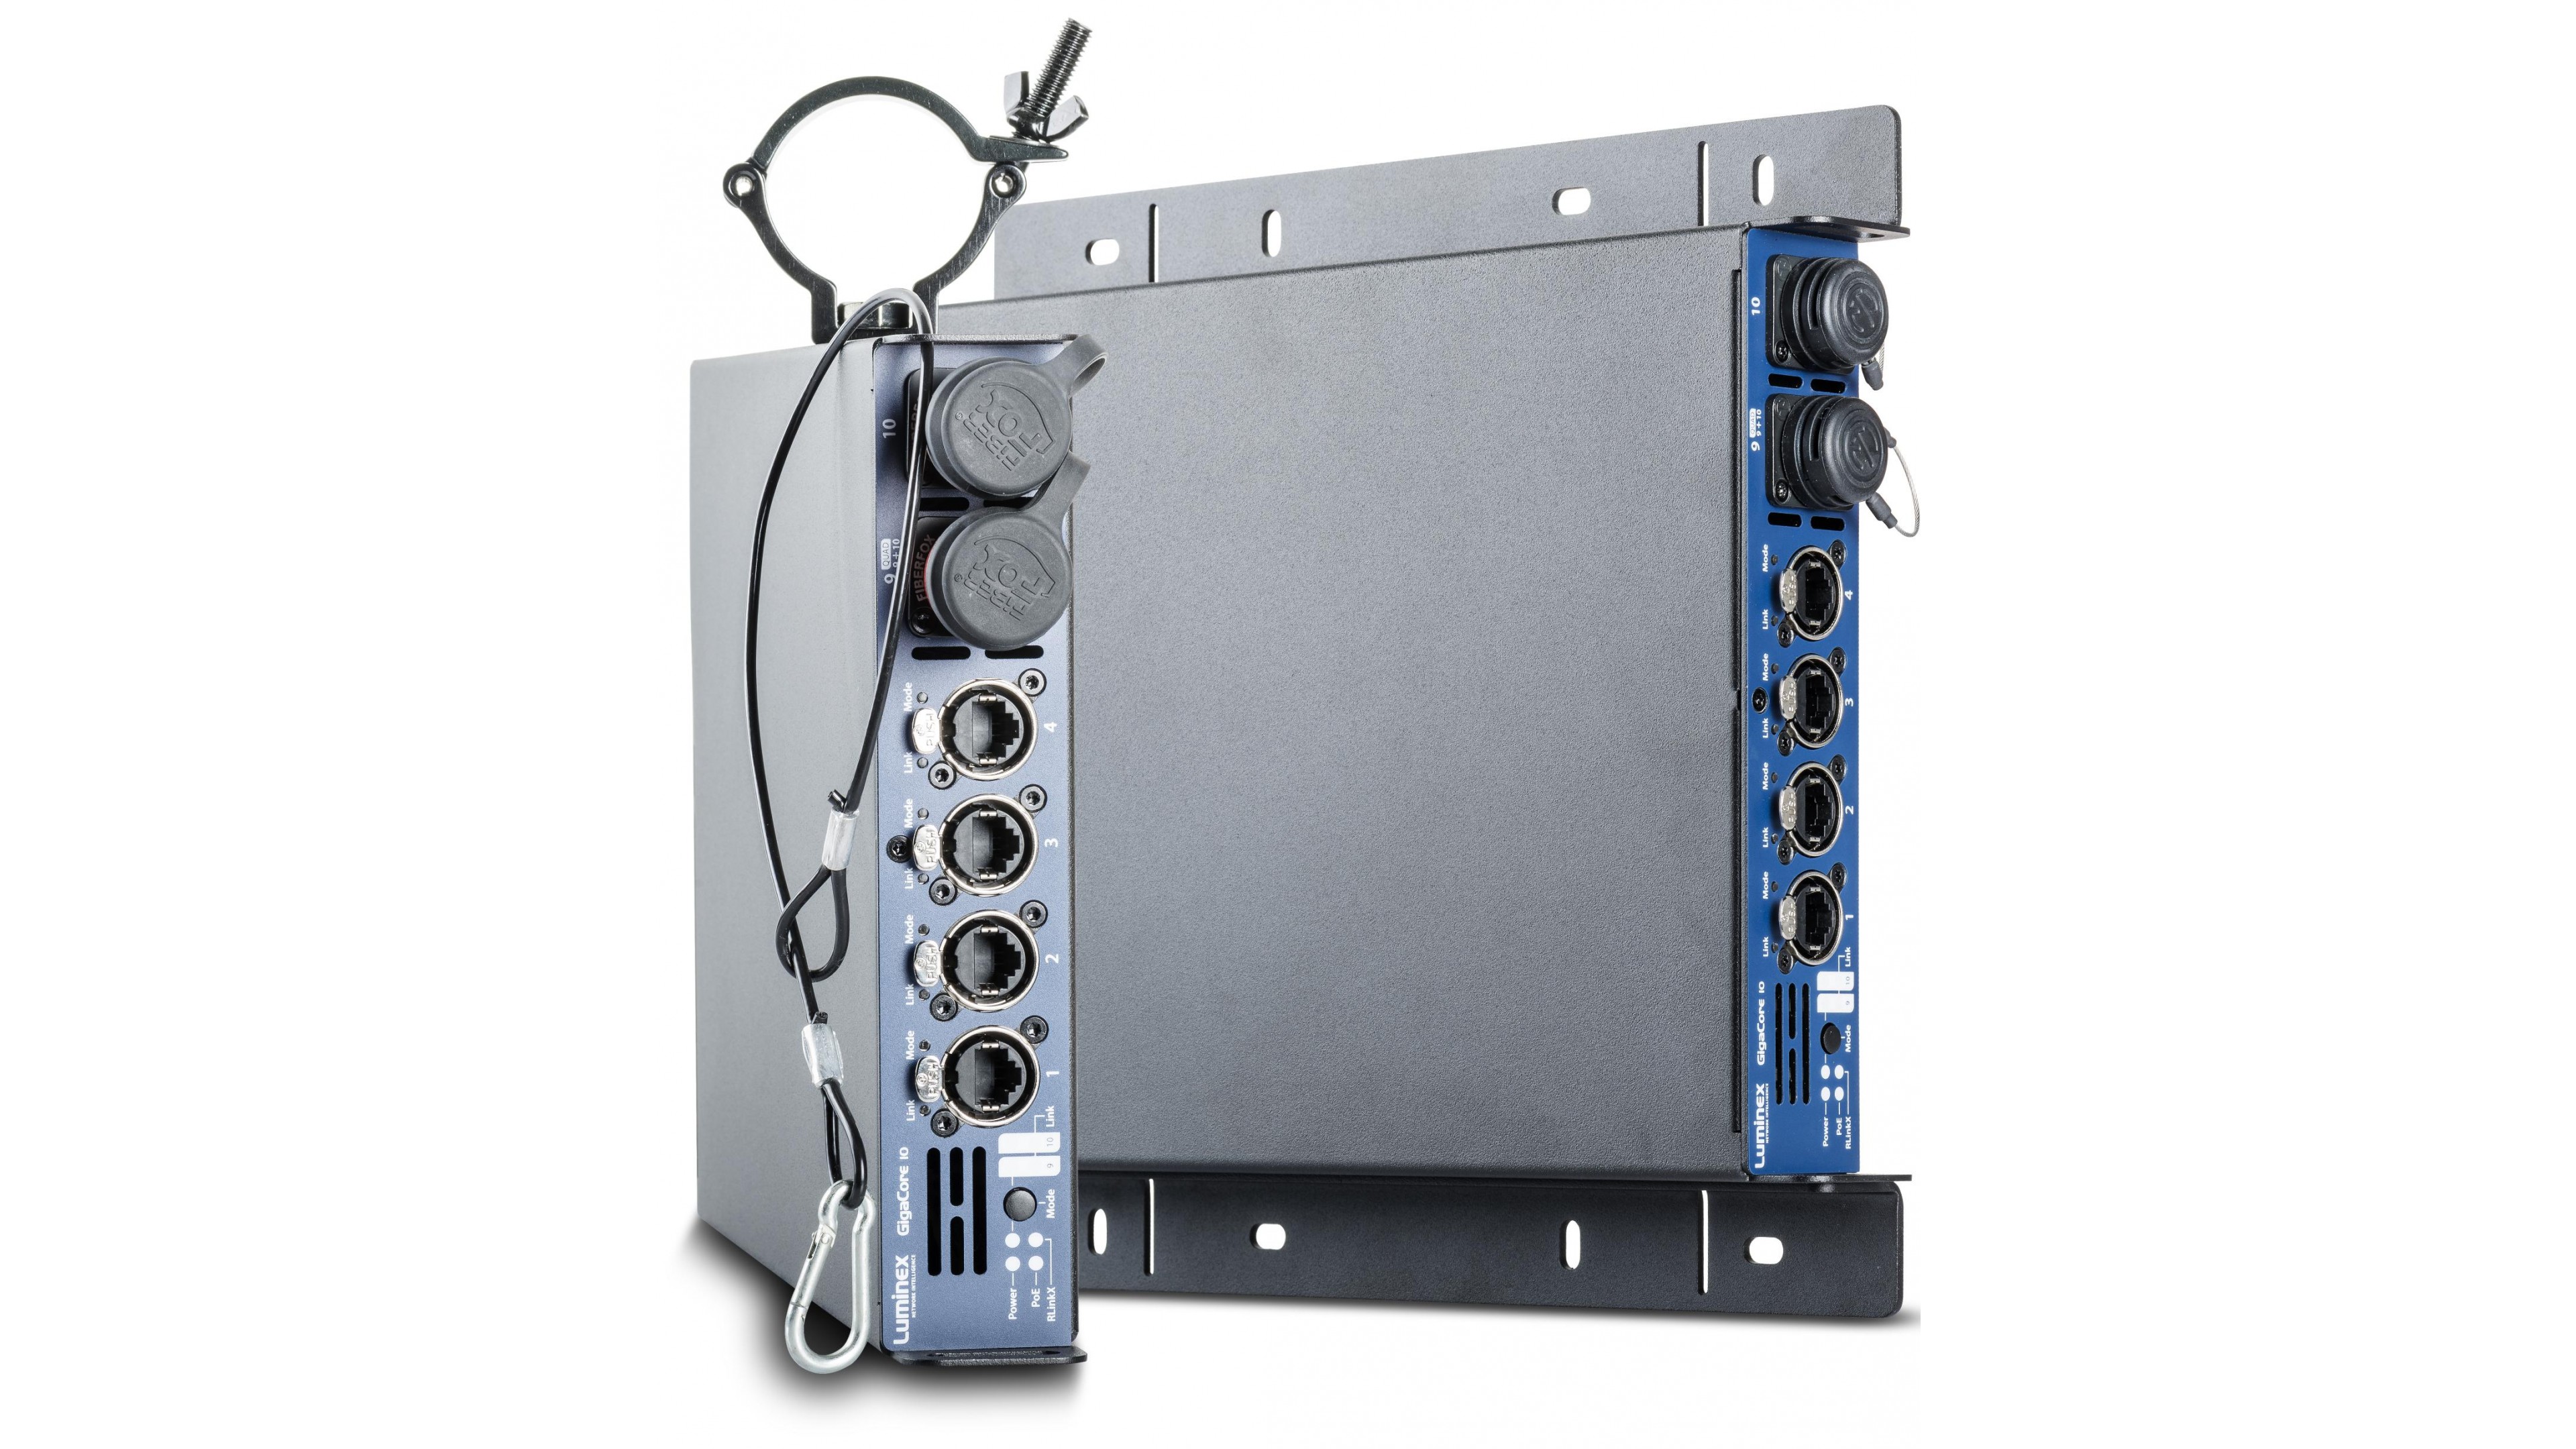 Luminex - GigaCore 10 - Ethernet & fiber network switch for touring